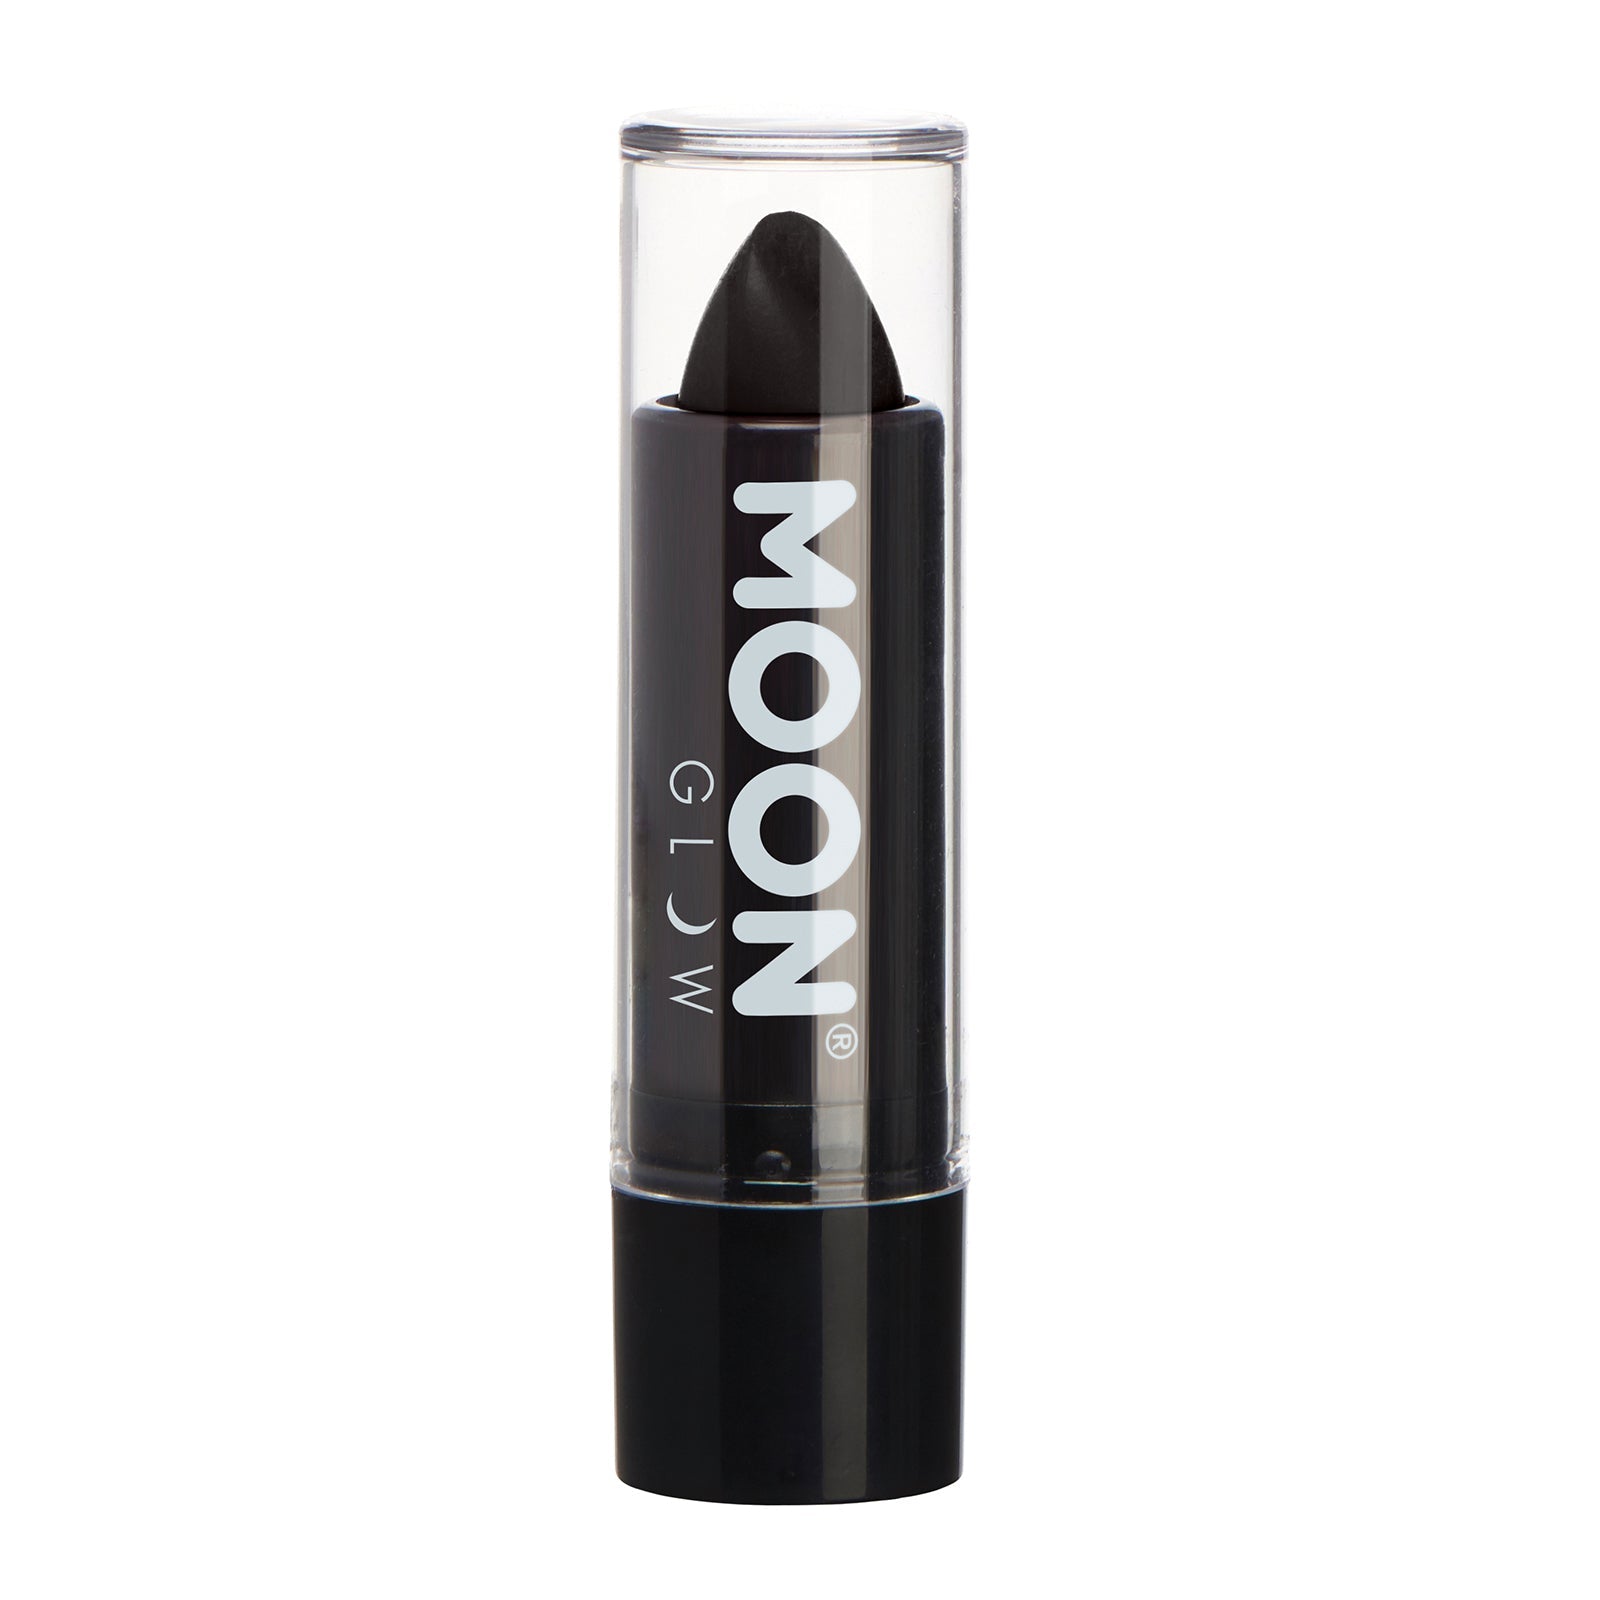 Black - Neon UV Glow Blacklight Lipstick, 5g. Cosmetically certified, FDA & Health Canada compliant and cruelty free.